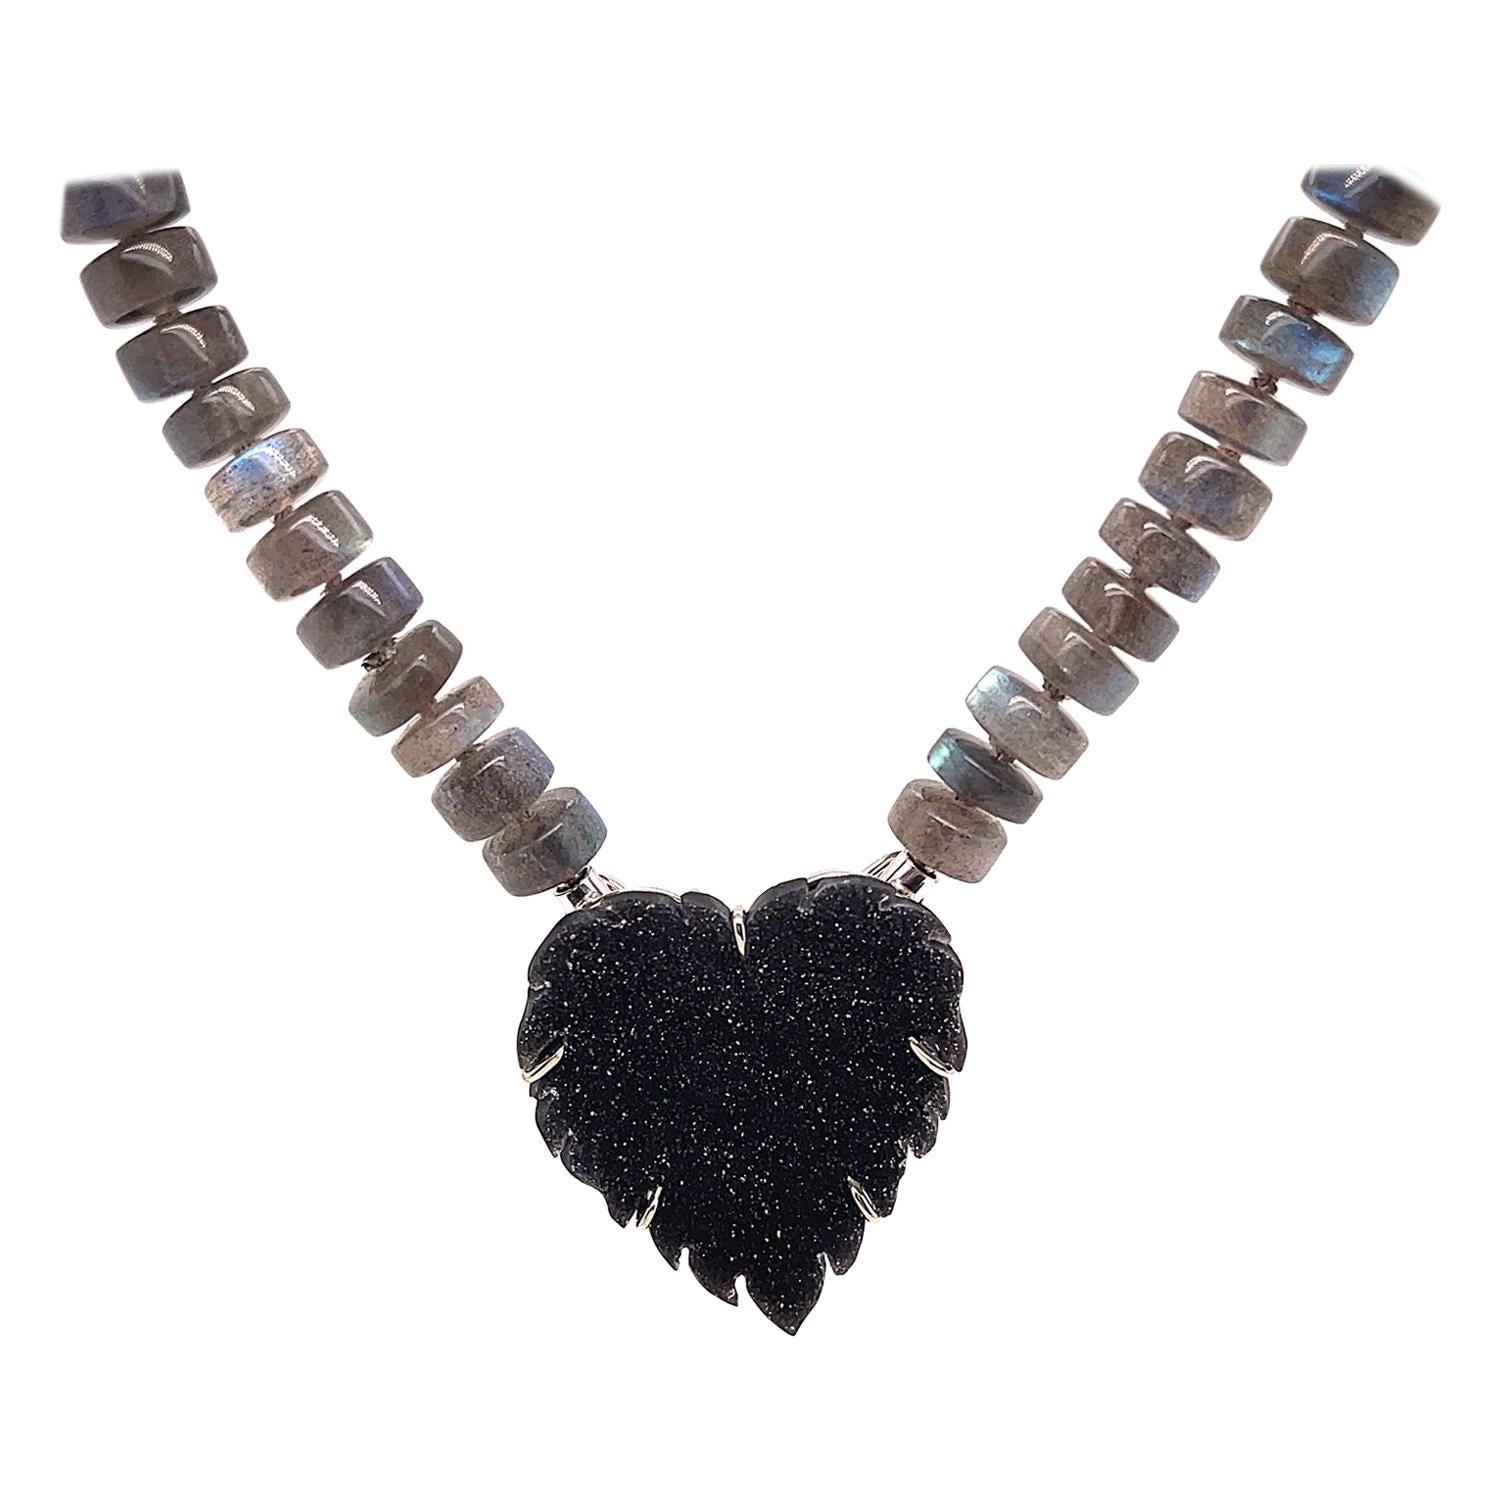 Rondell Labradorite Necklace with Black Druzy Heart Clasp